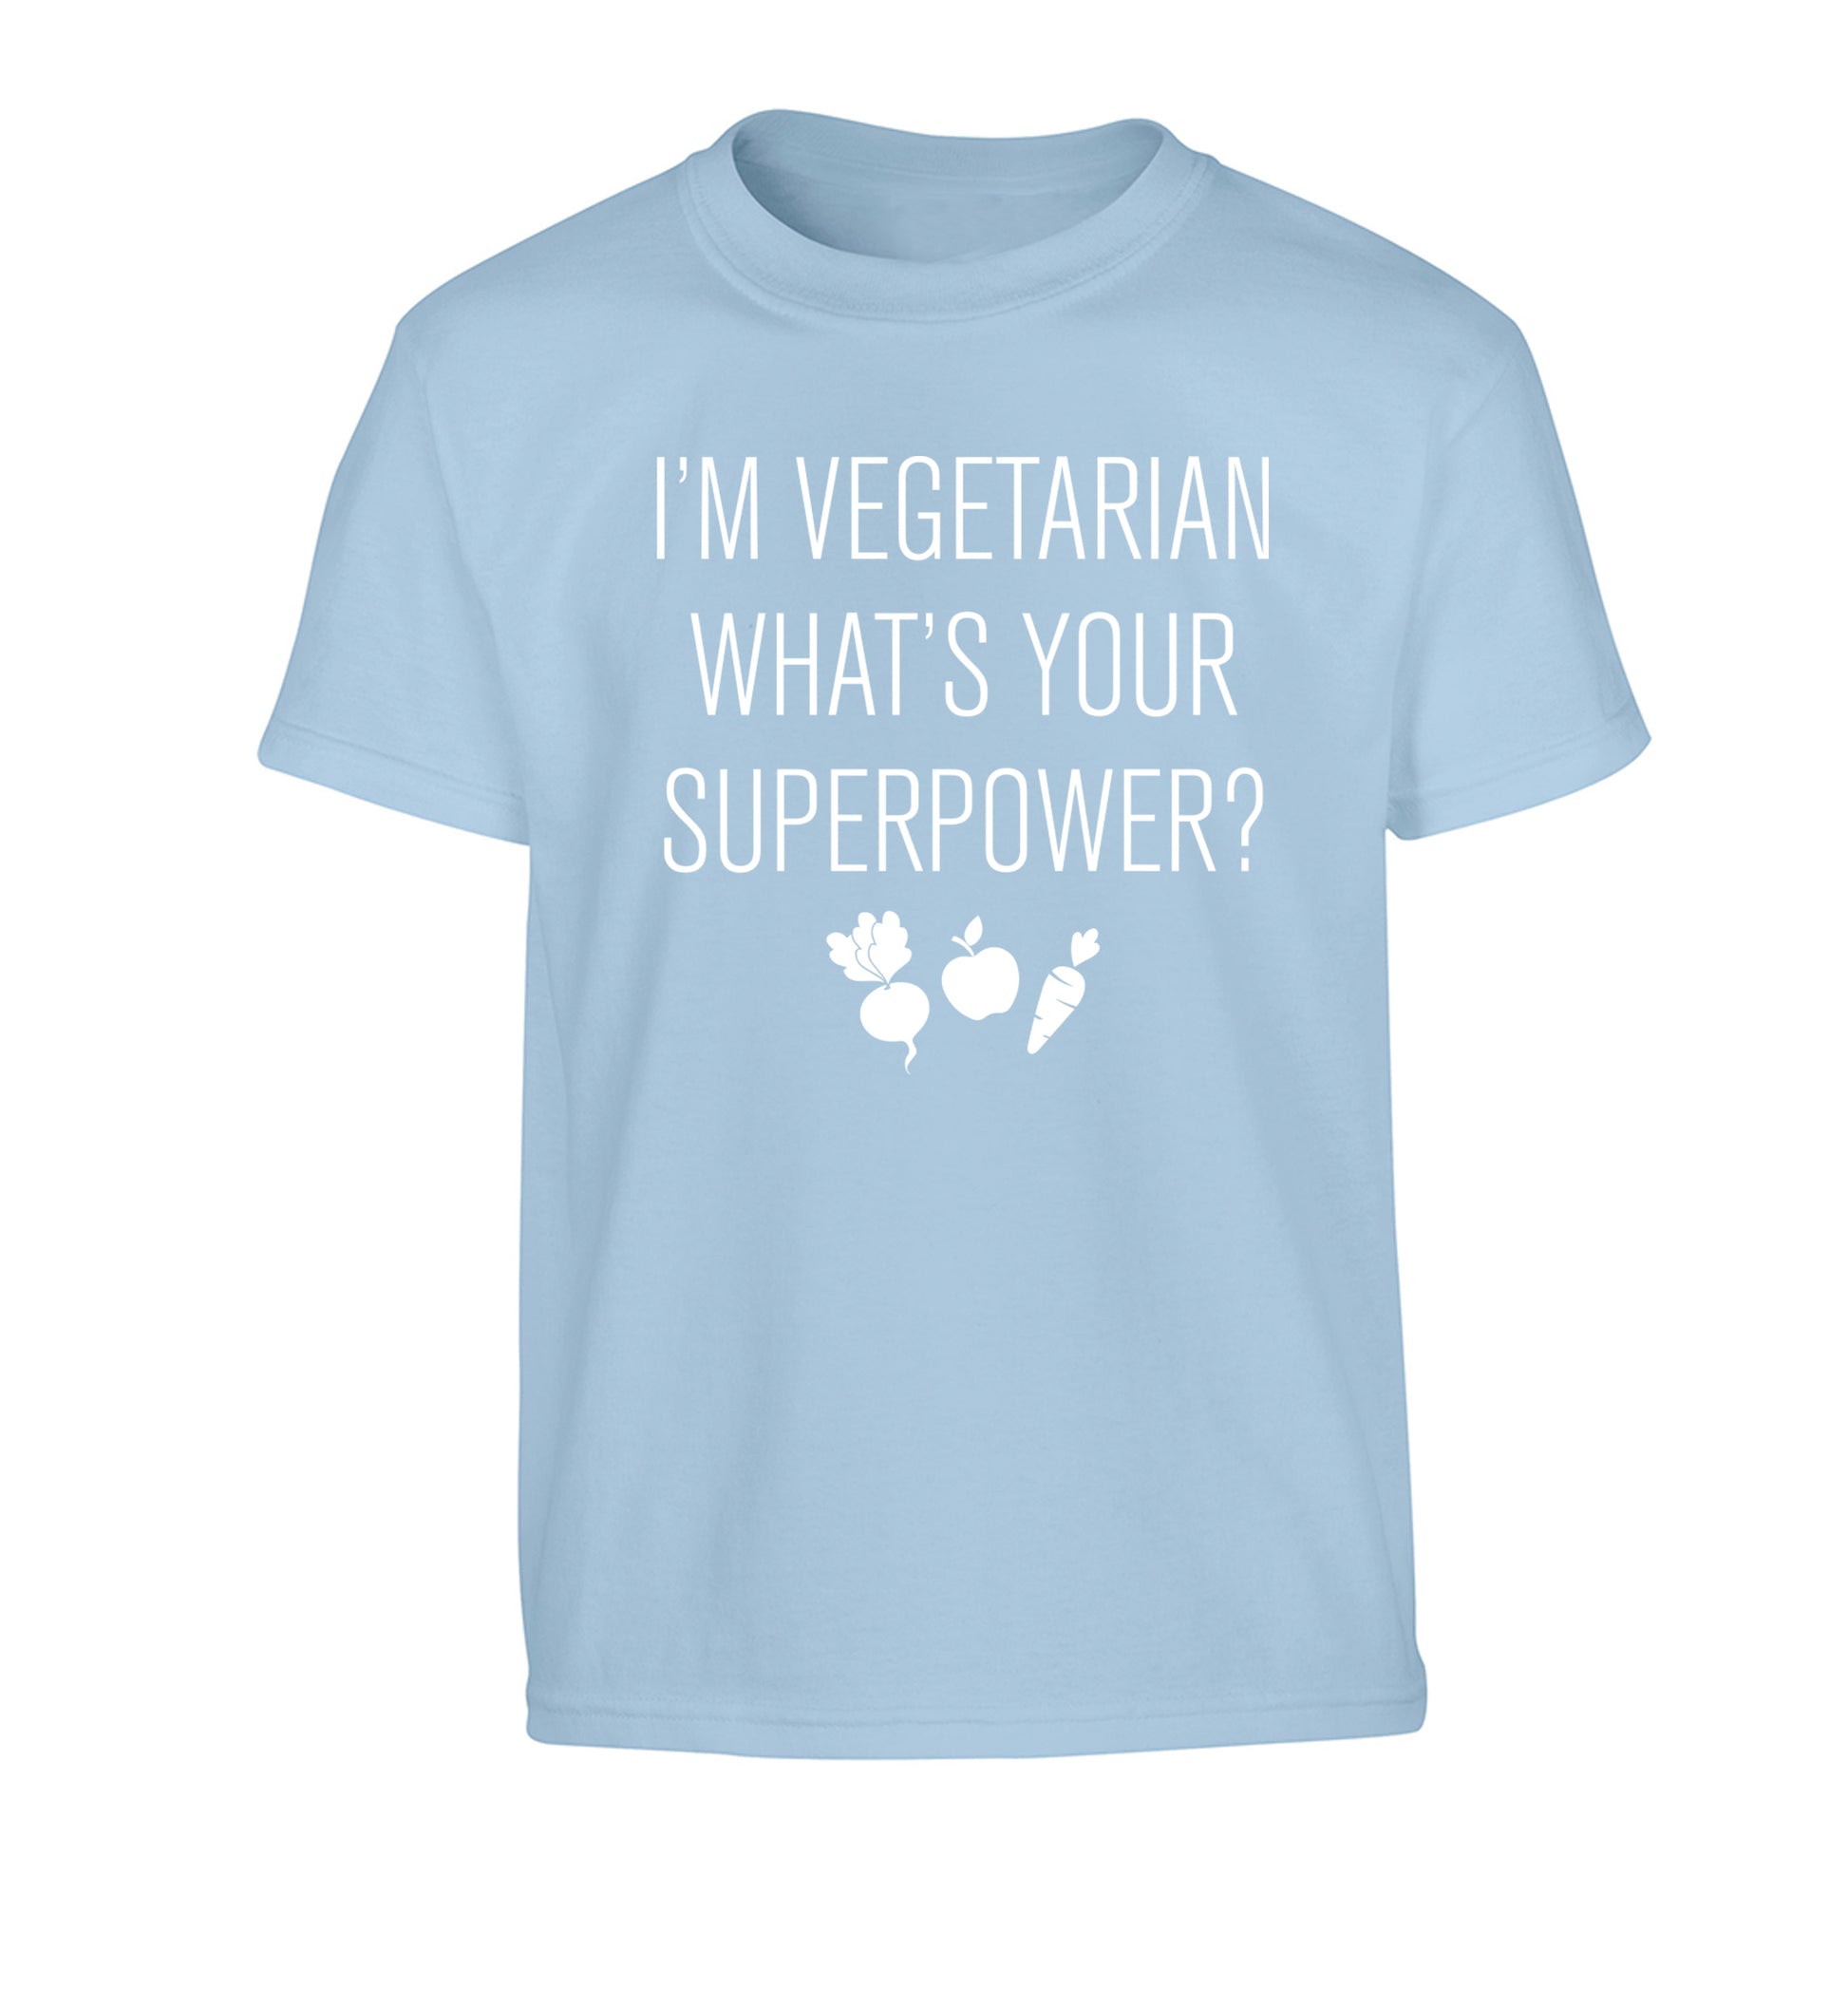 I'm vegetarian what's your superpower? Children's light blue Tshirt 12-13 Years